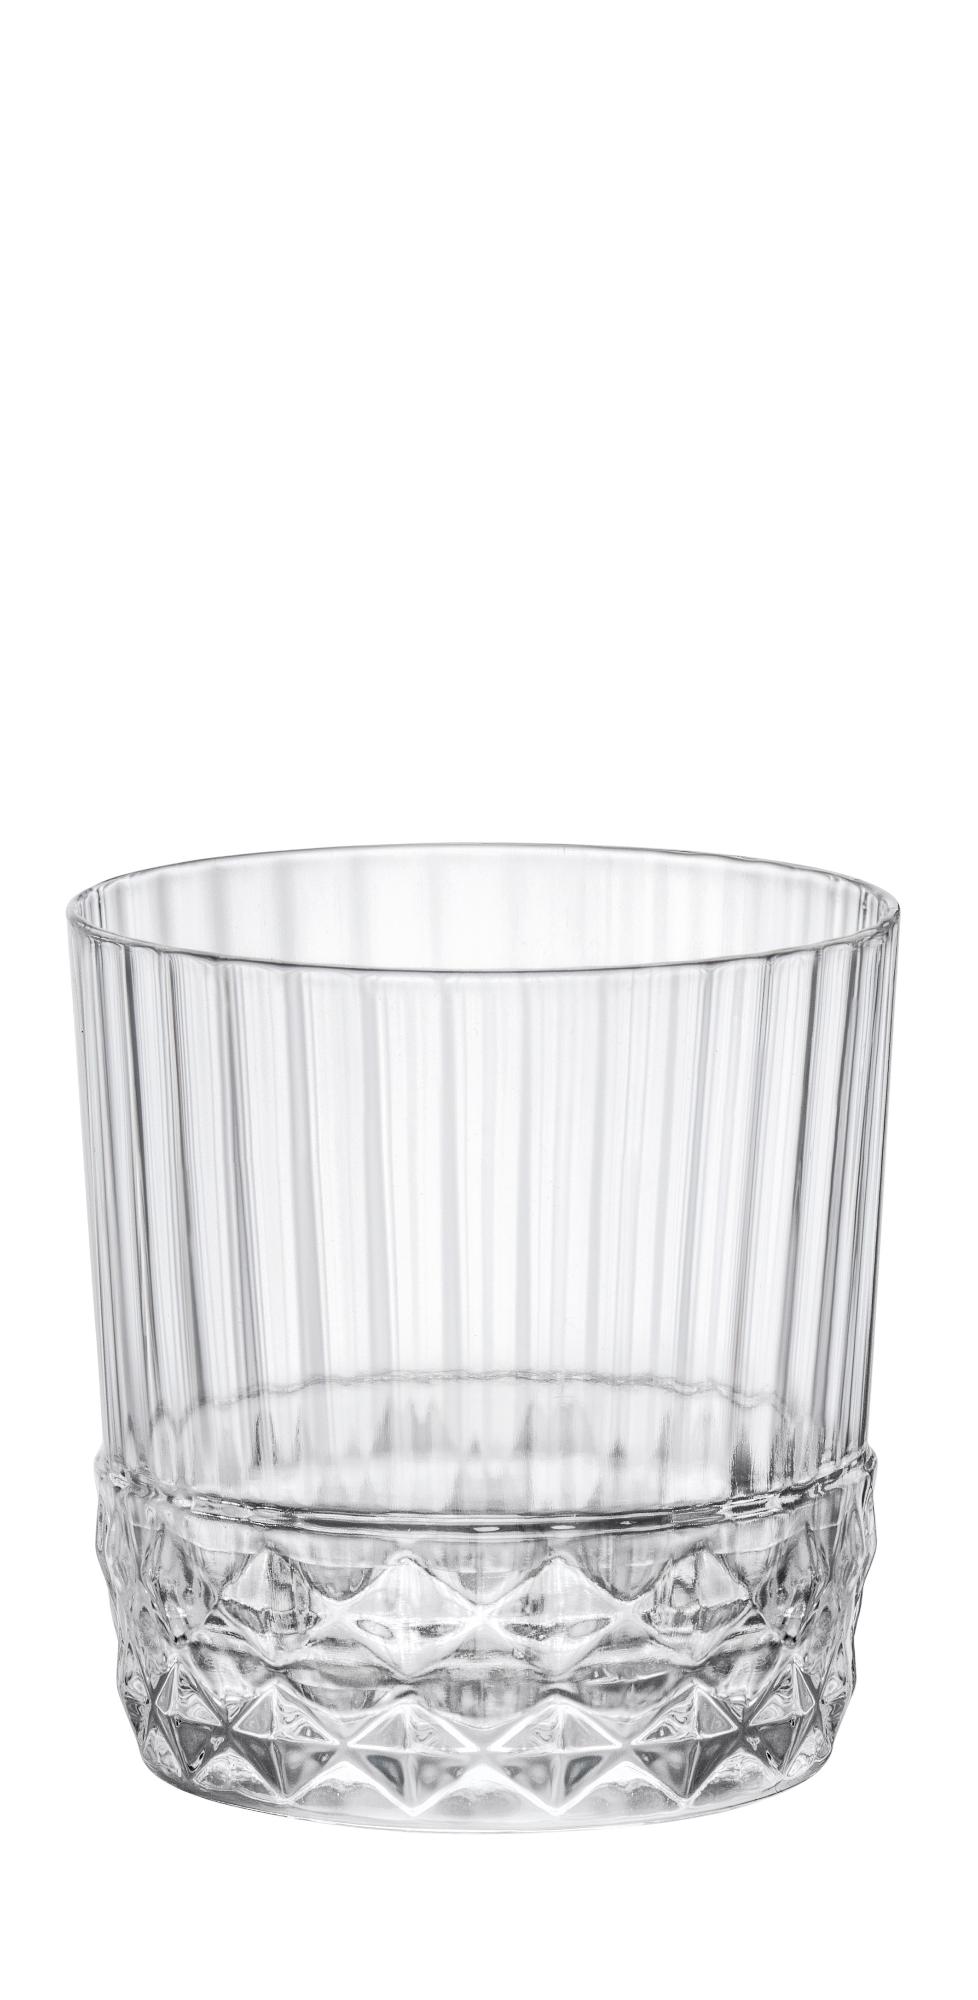 America'20s lowball glass, 380 ml